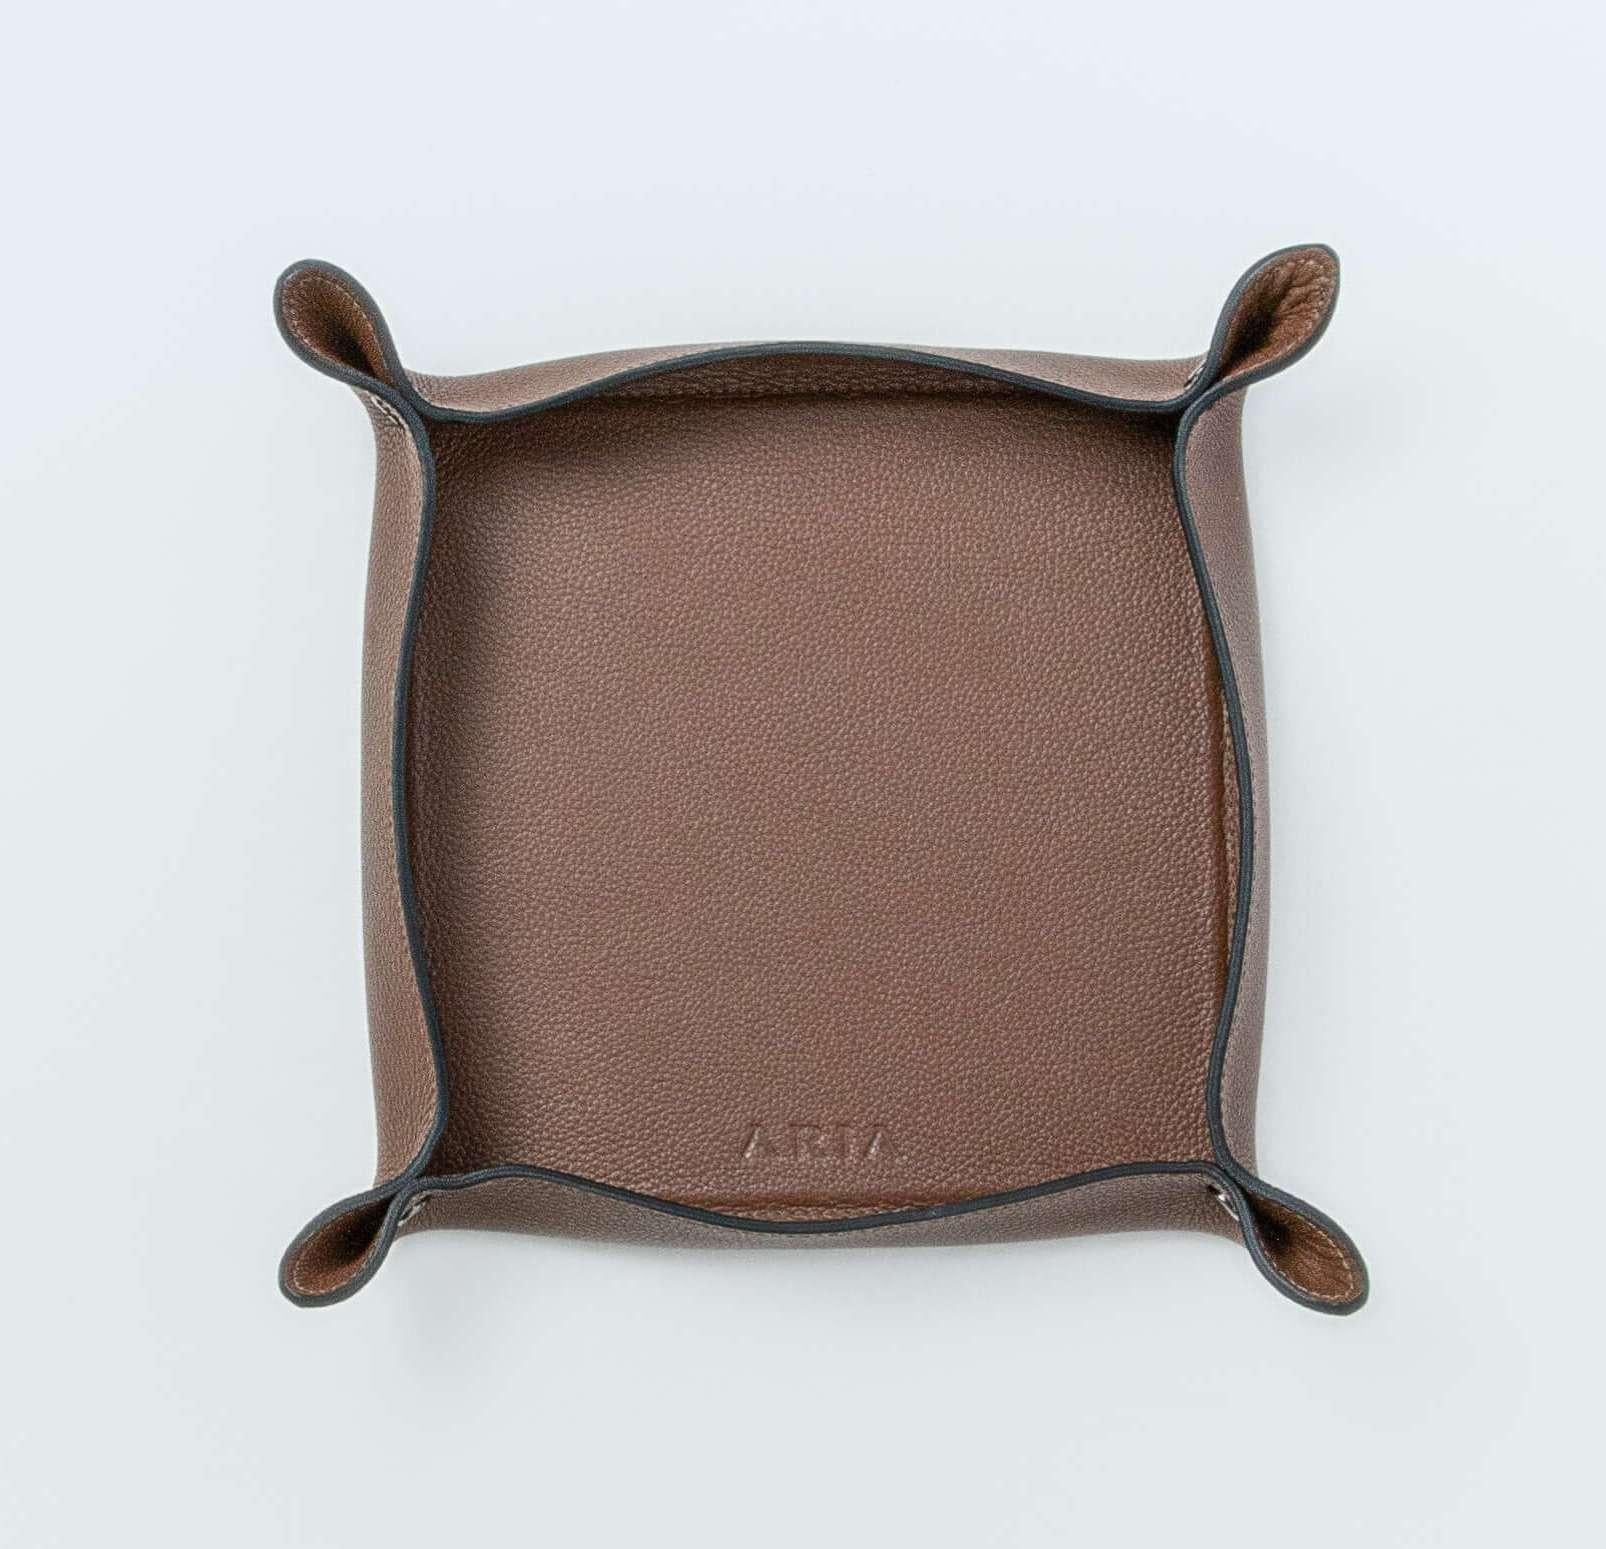 Brazilian Leather Trinket Tray - Medium Square Object Holder - Handmade - Color: Caramel For Sale